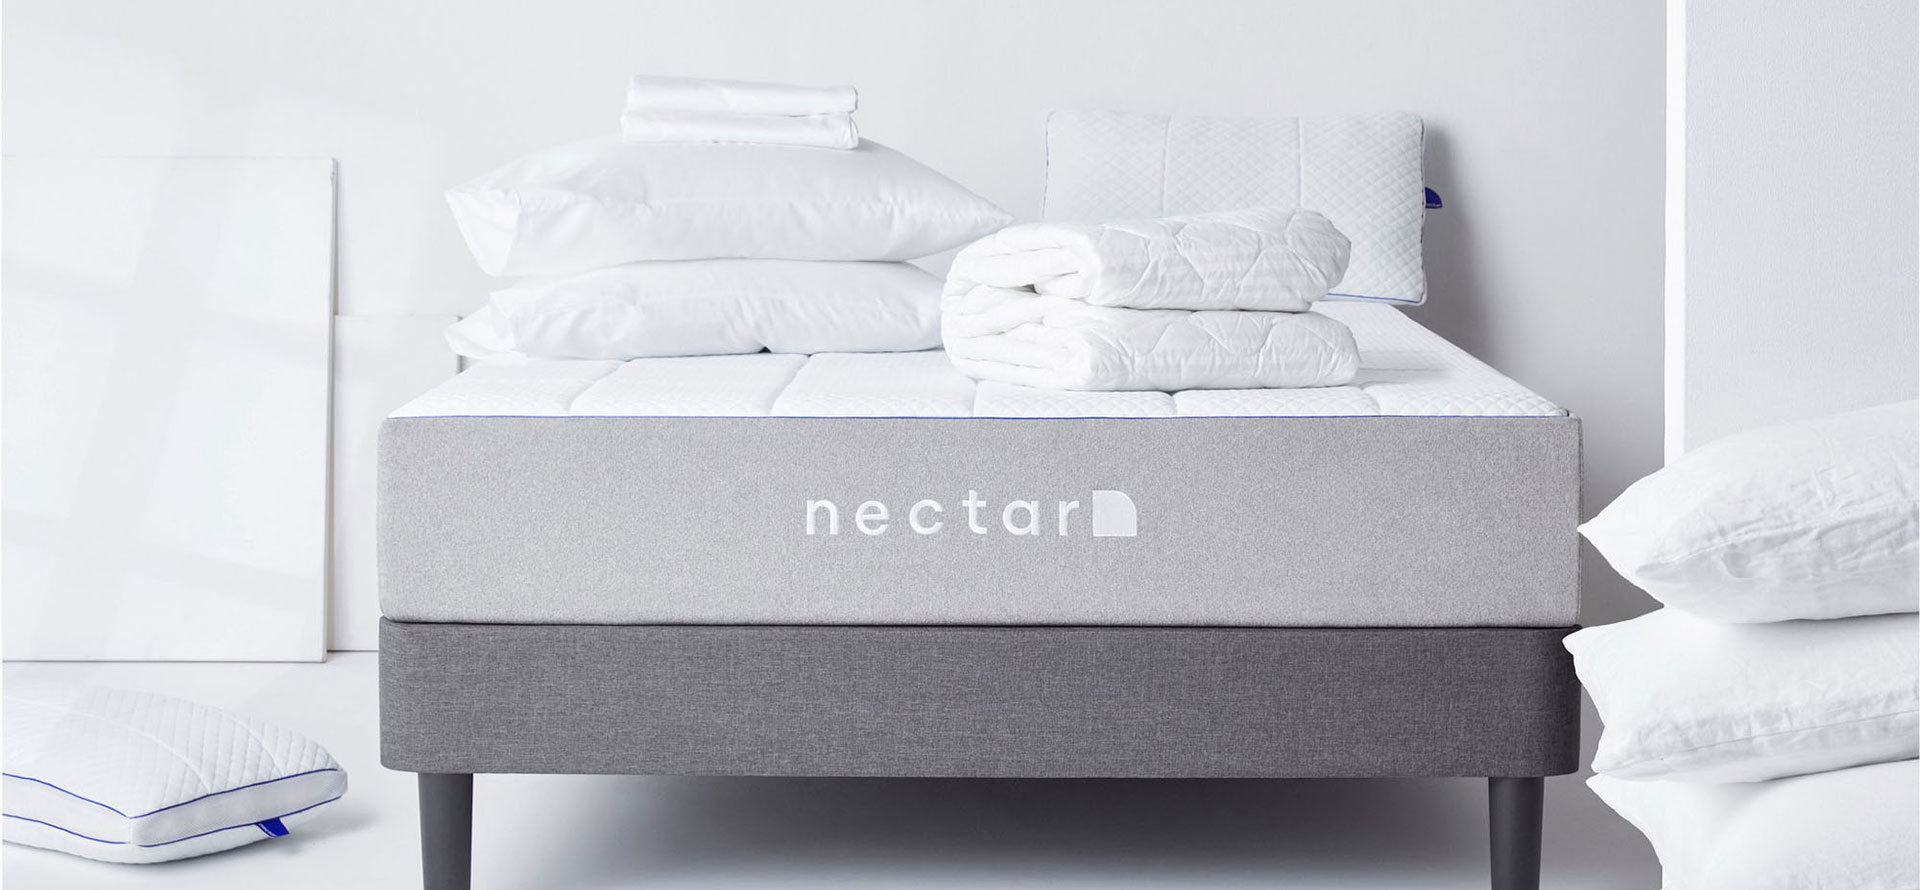 Nectar mattress in room.